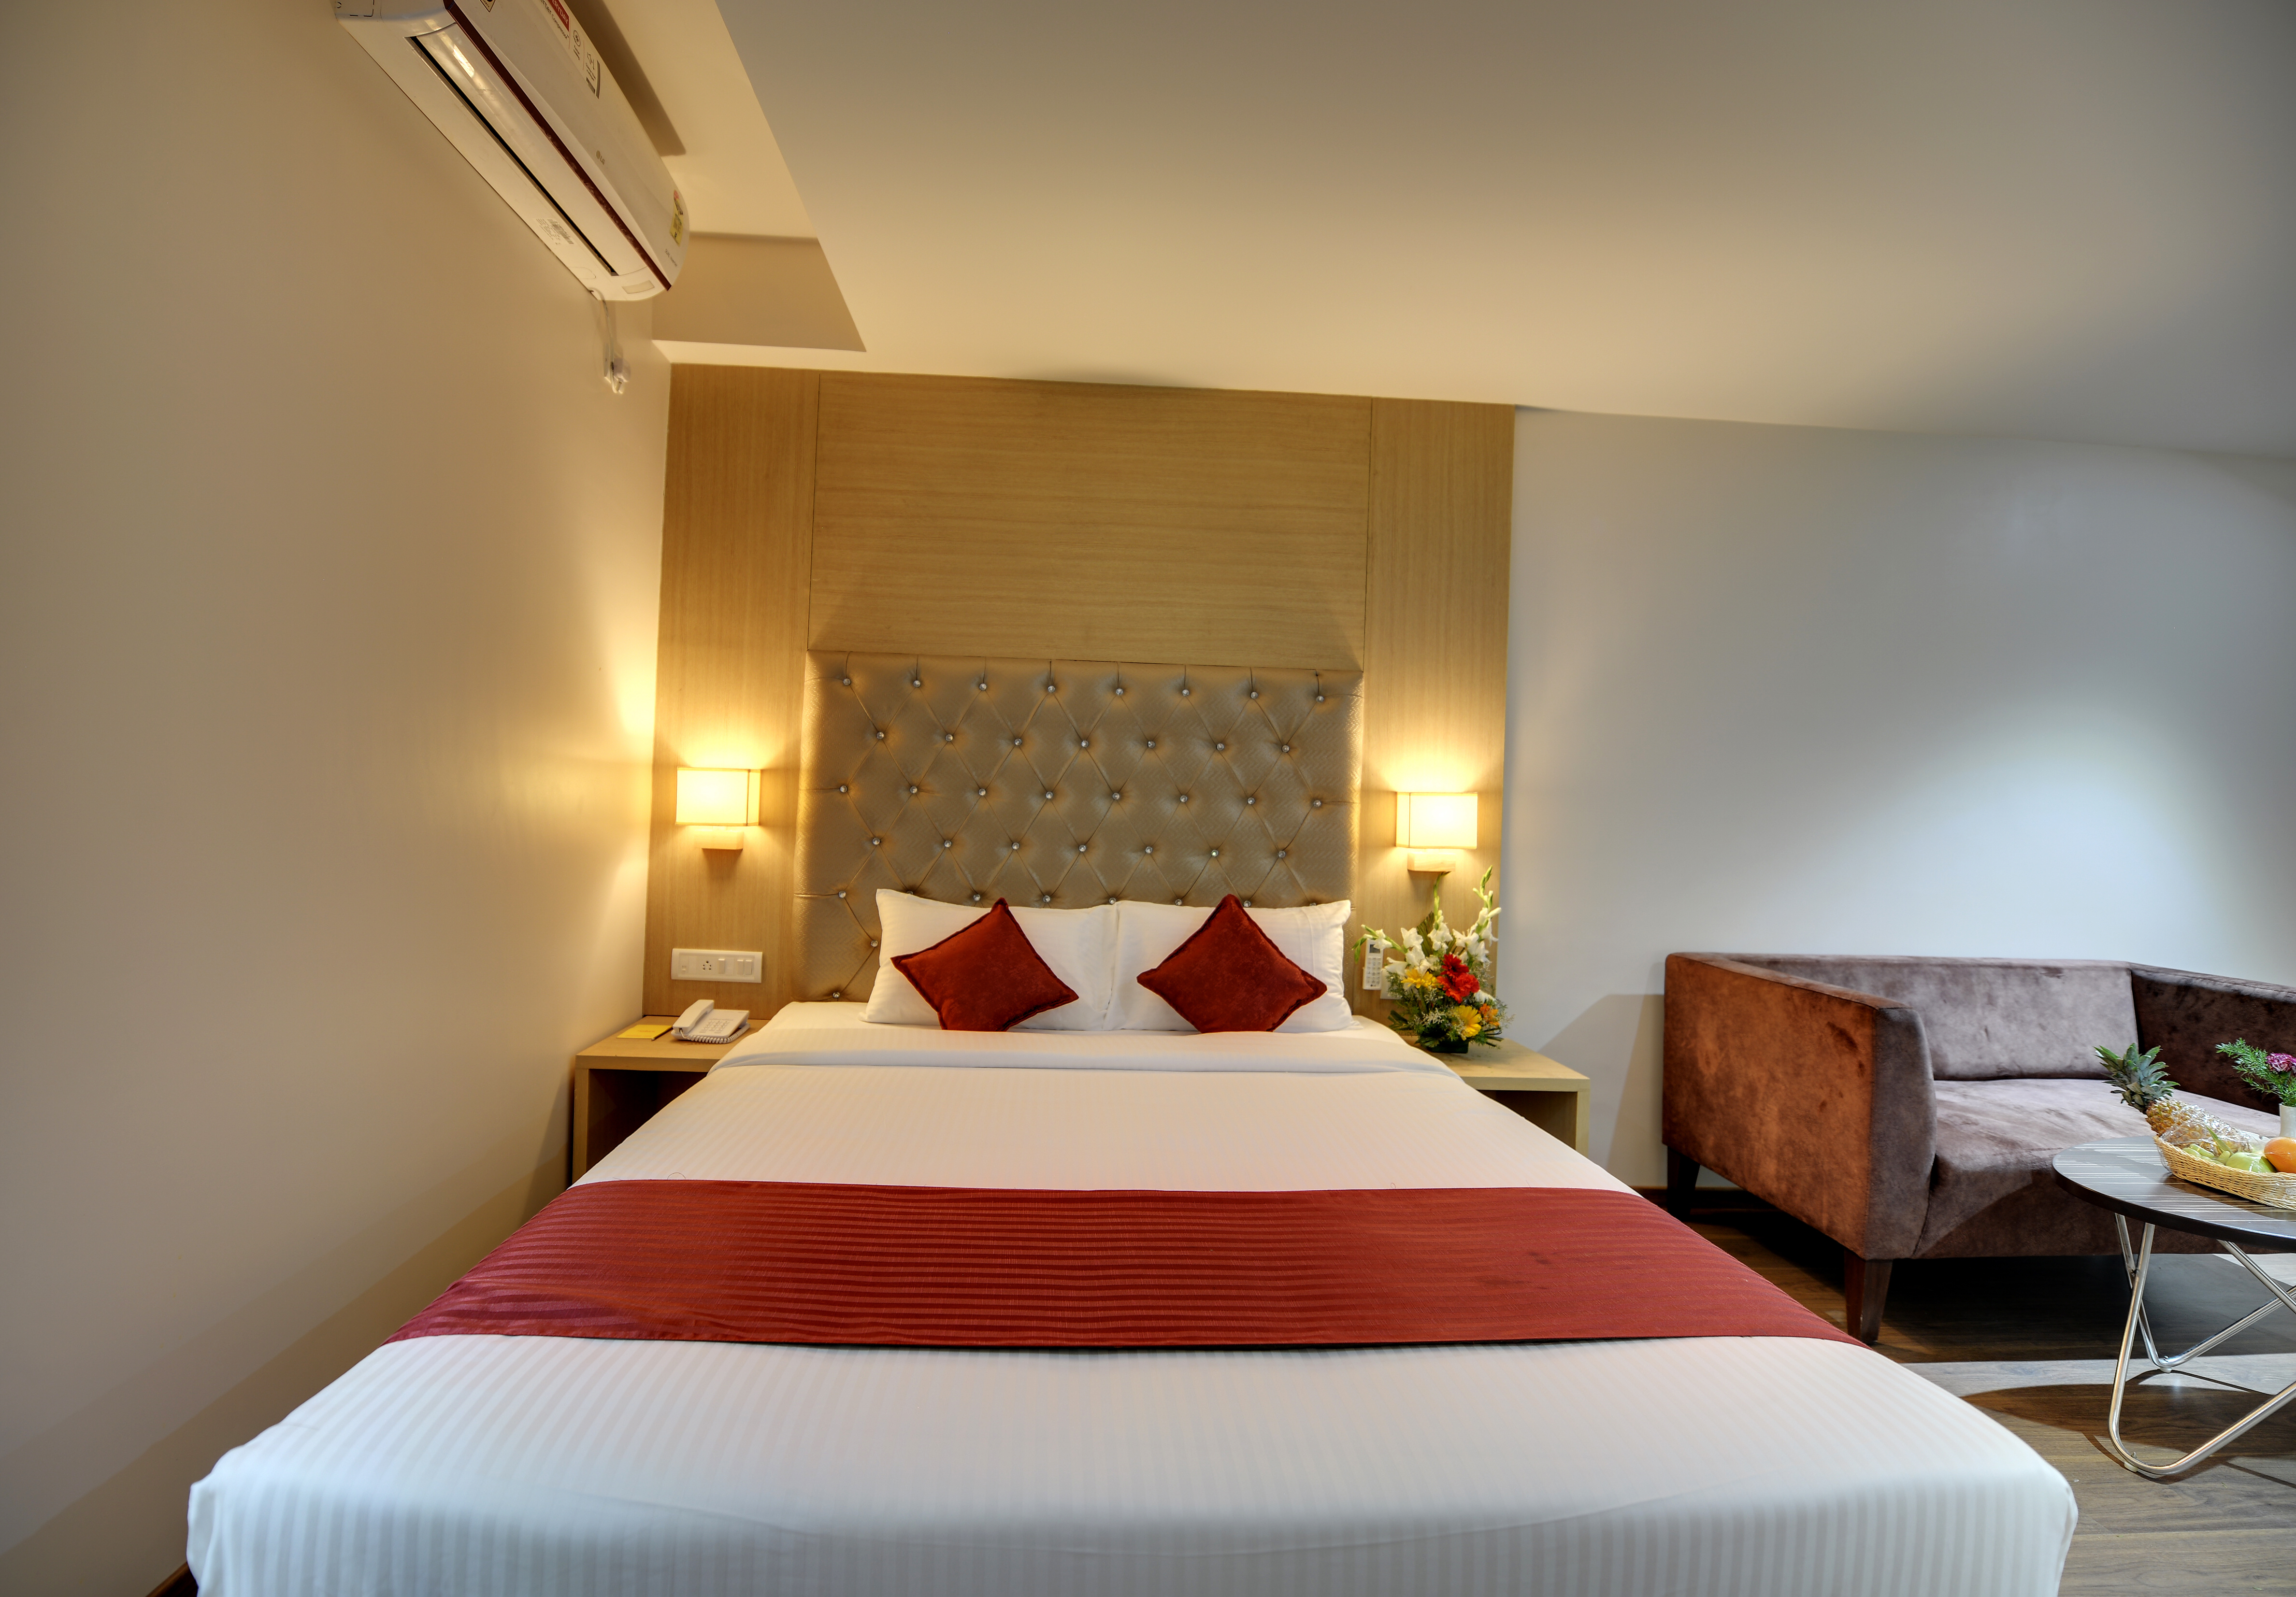 Club Room Hotel Nandhana Pride Bangalore Best Hotels 6